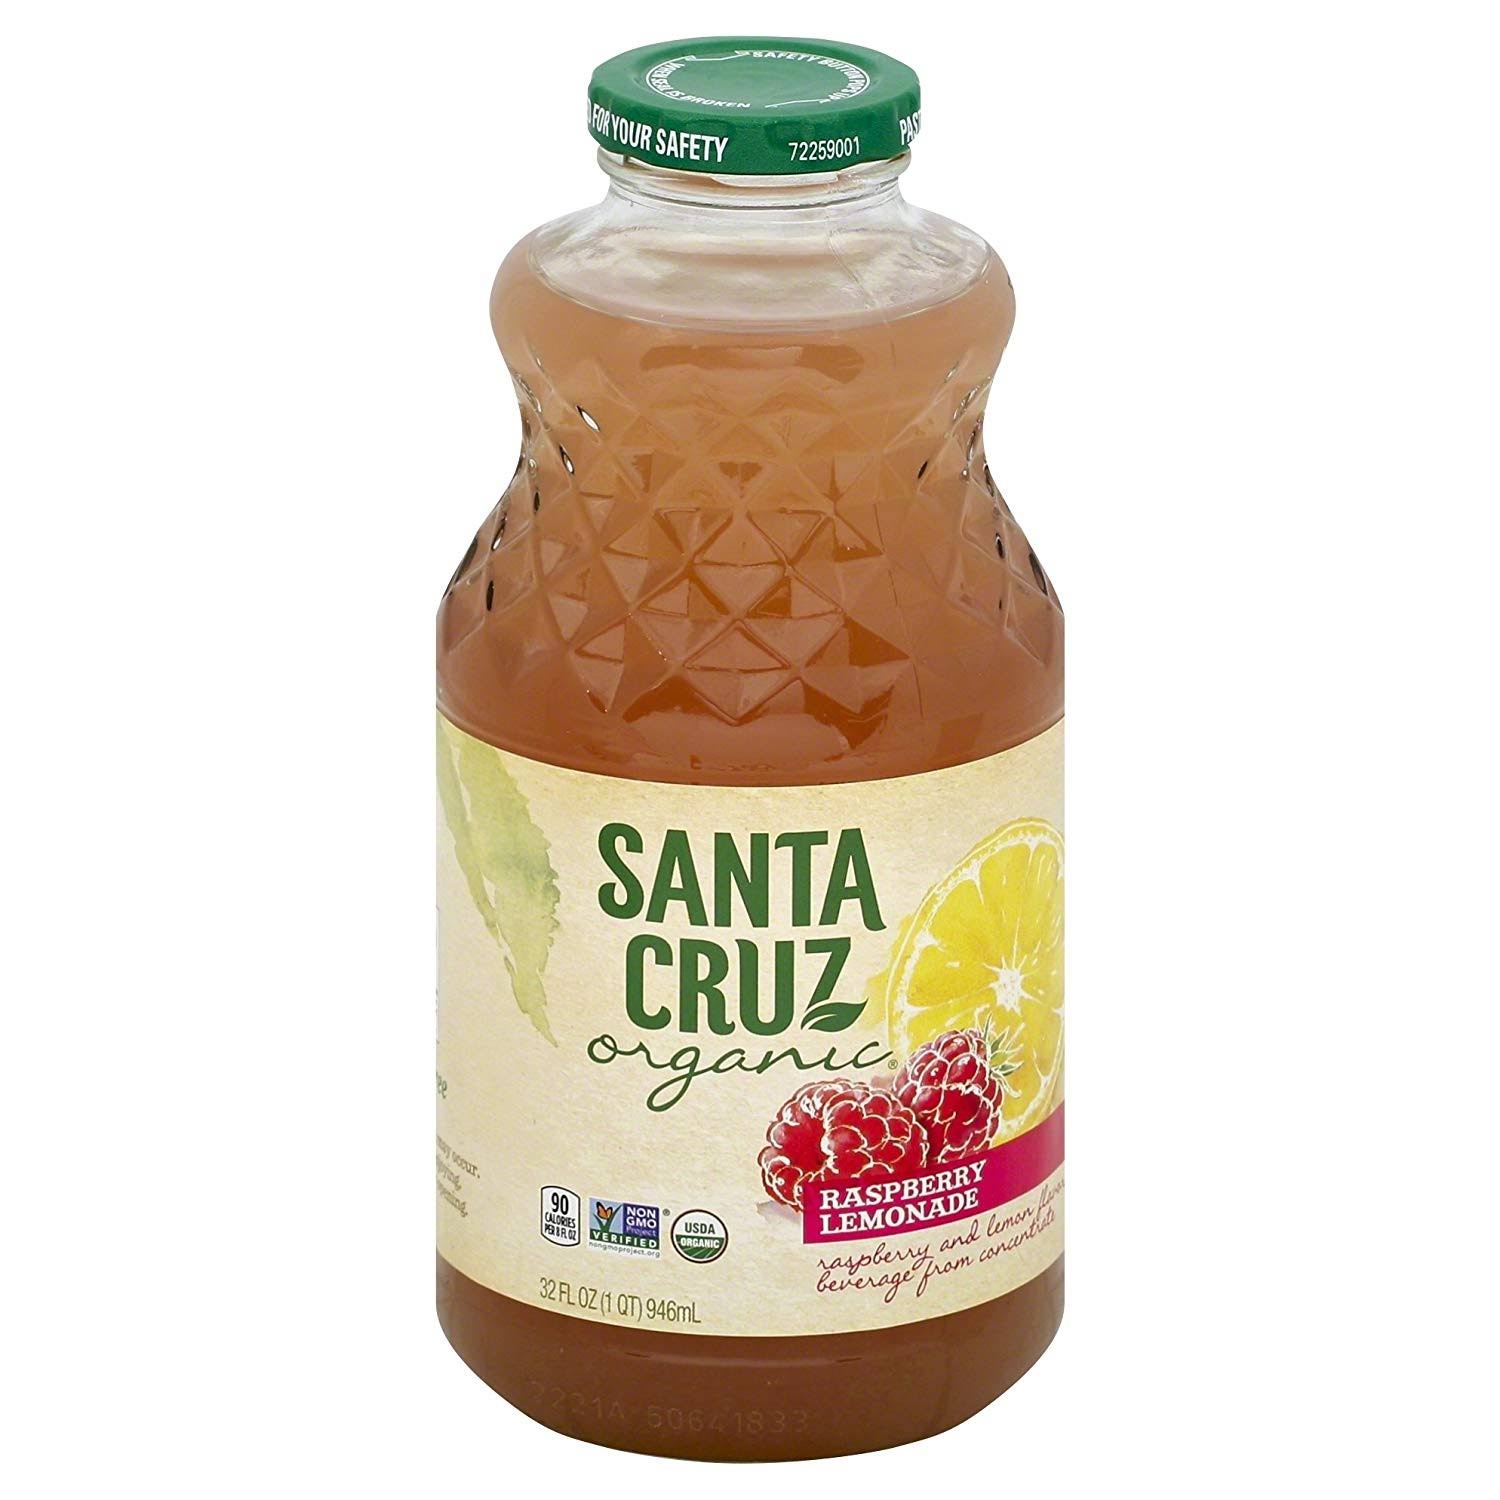 Santa Cruz Organic Raspberry Lemonade - 32oz